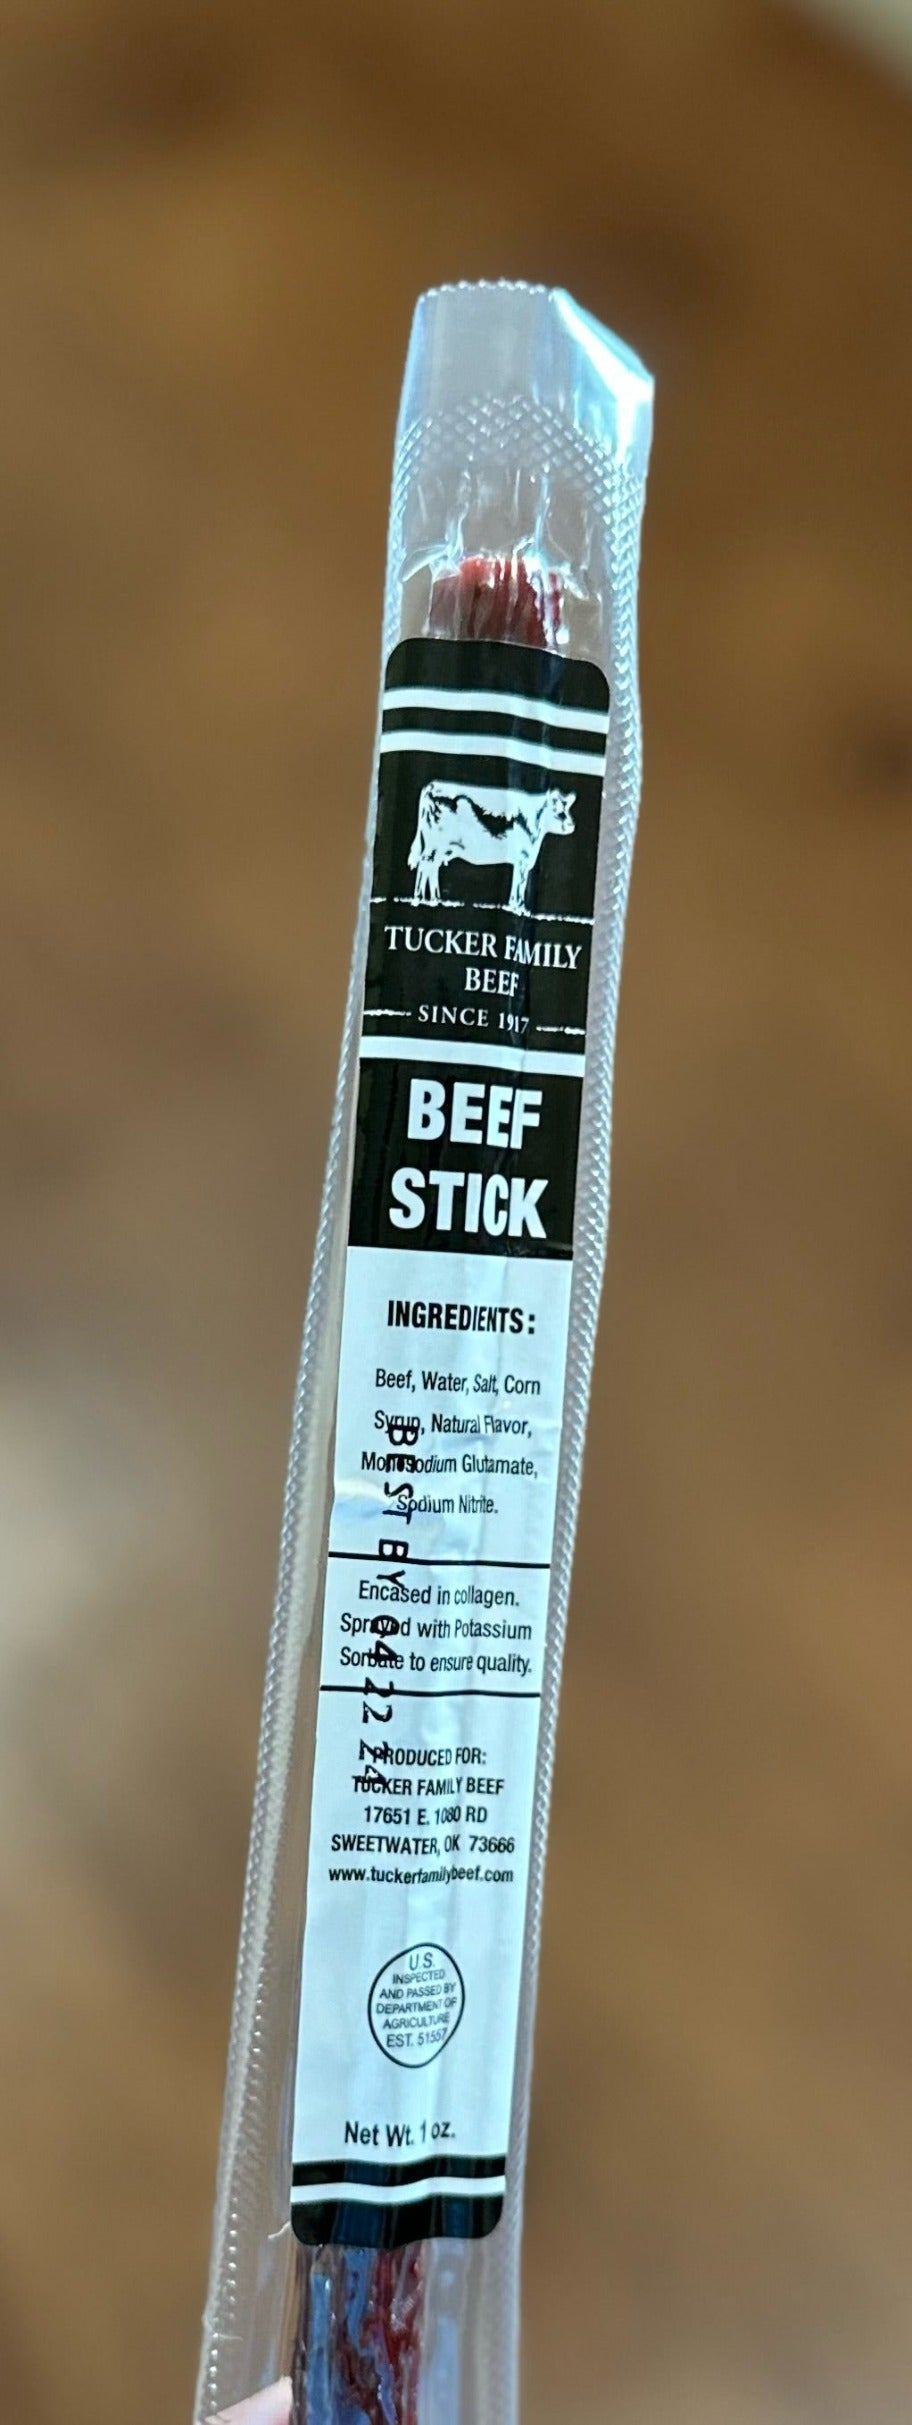 Original Beef Sticks